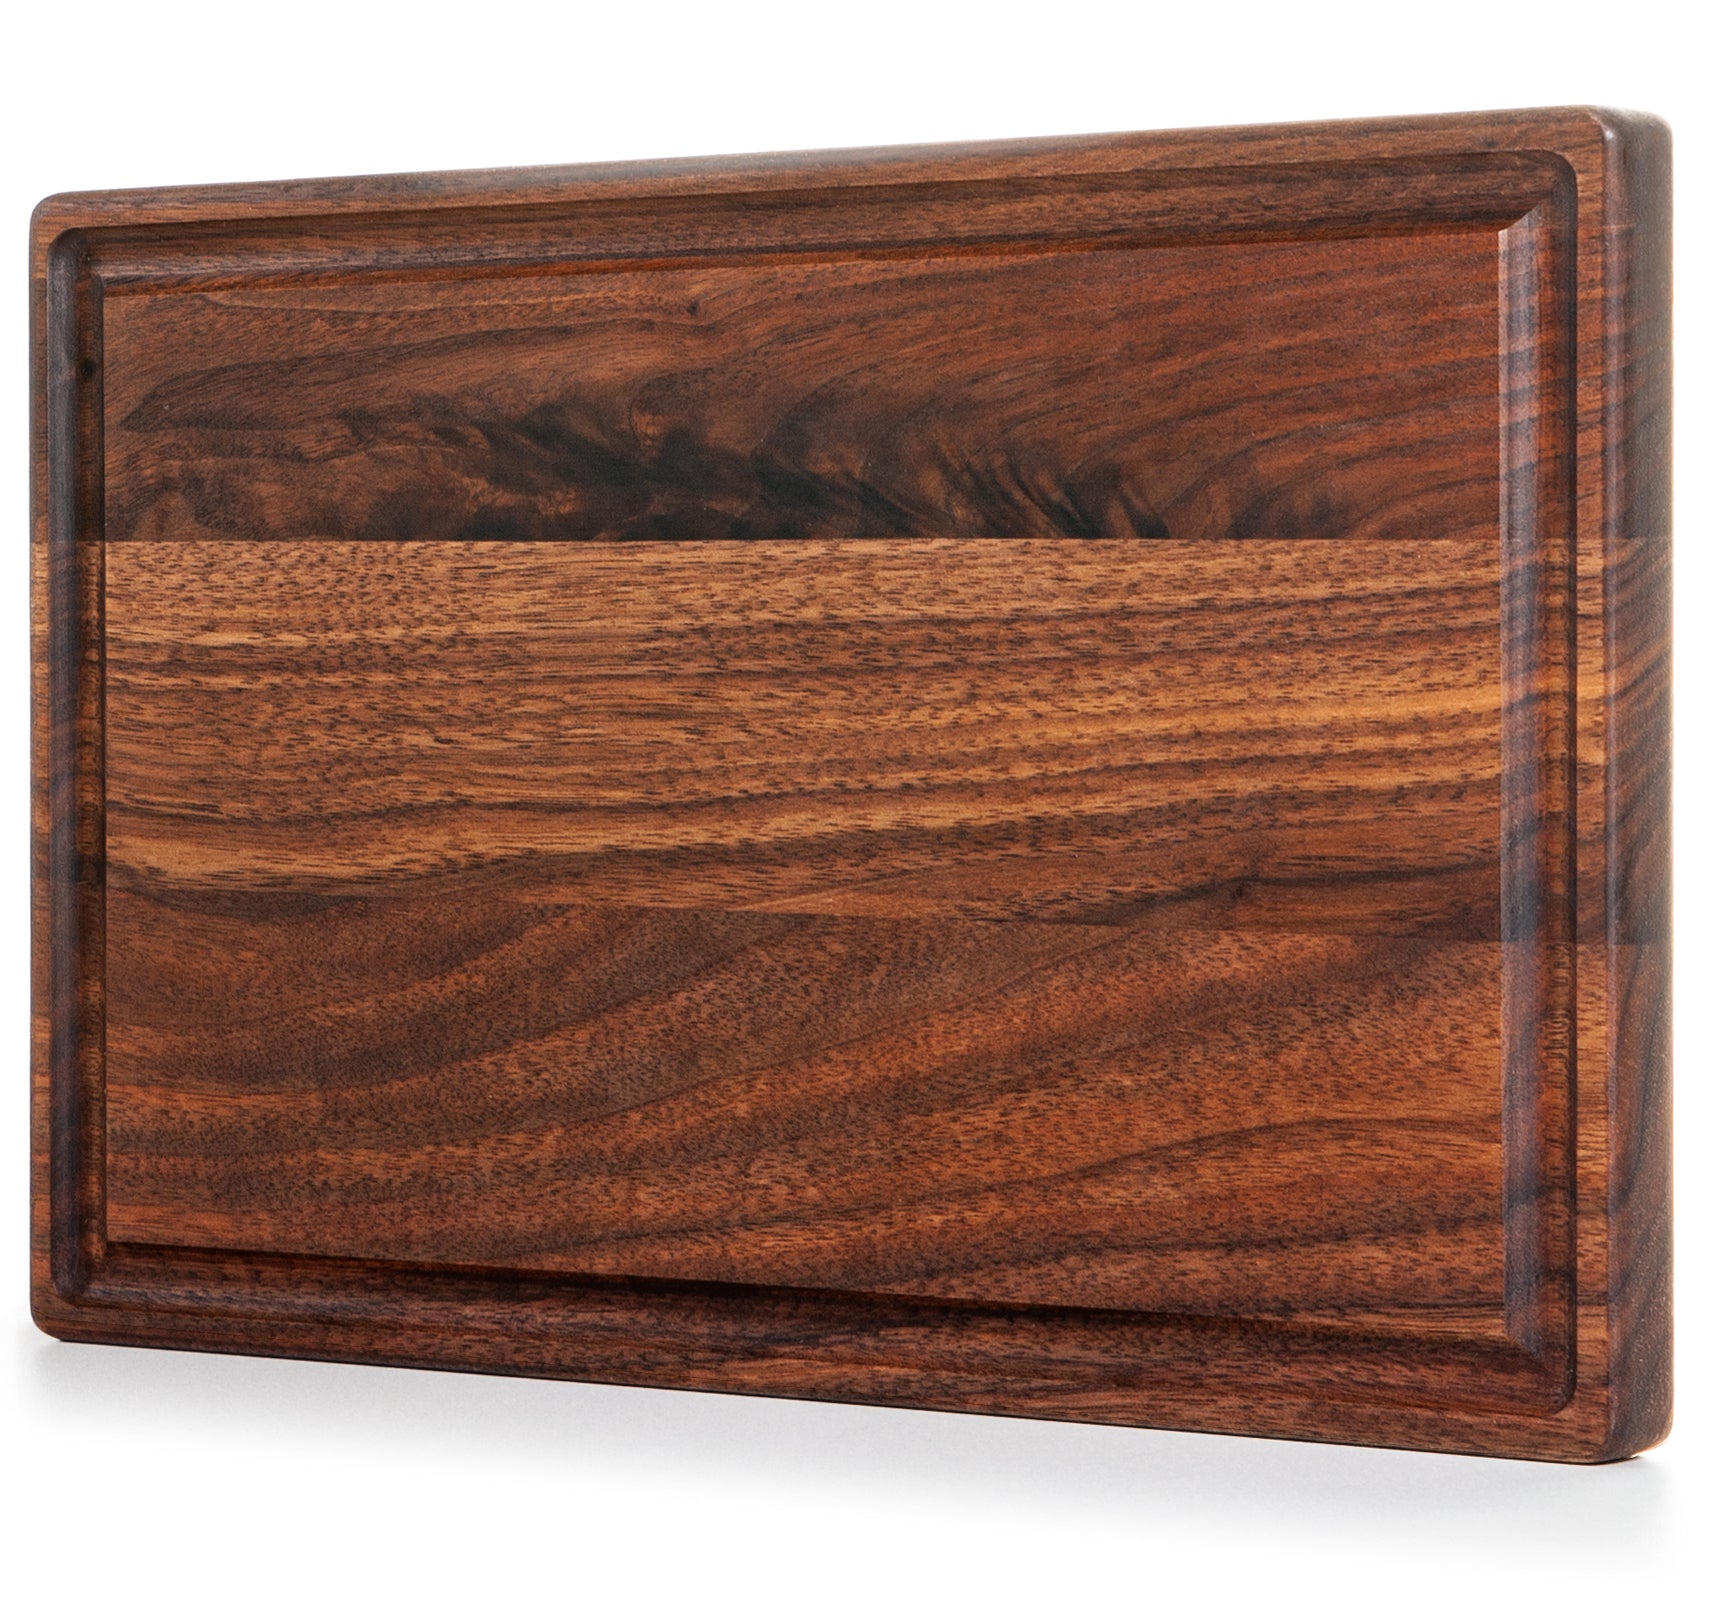 Small walnut cutting board 17x11x0.75 inch